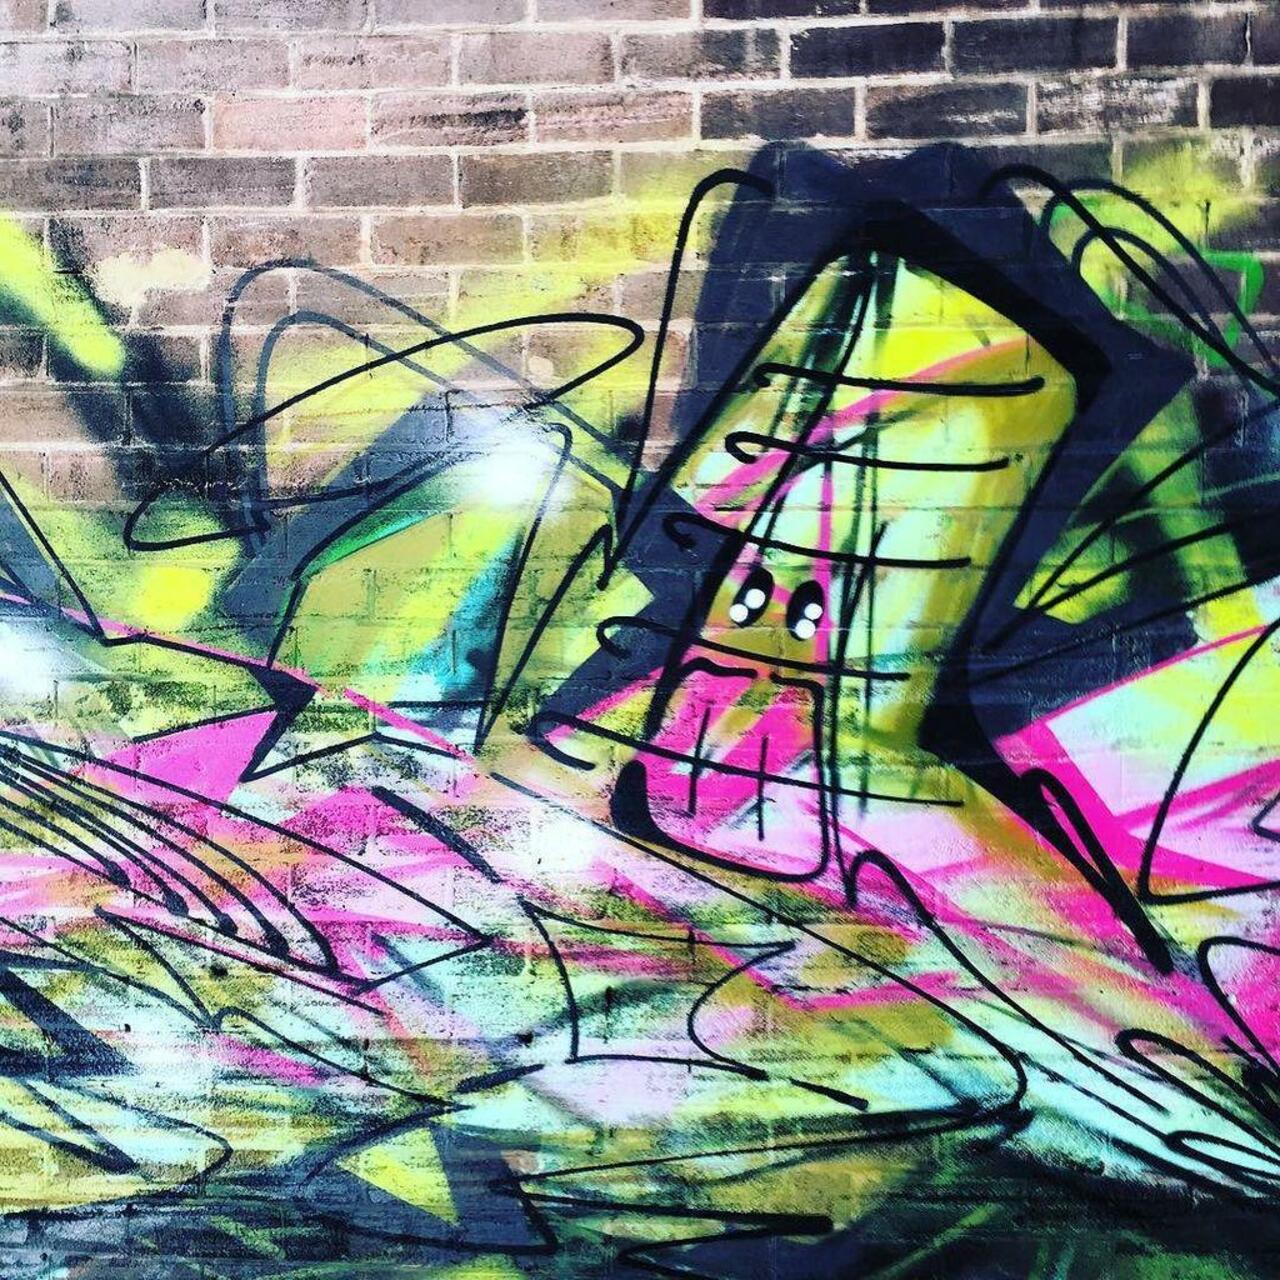 #streetart #graffiti #art #darlo #darlinghurst  #sydney #publicart #artofinsta http://ift.tt/1KhwBVh http://t.co/Q0iFYdgOQK